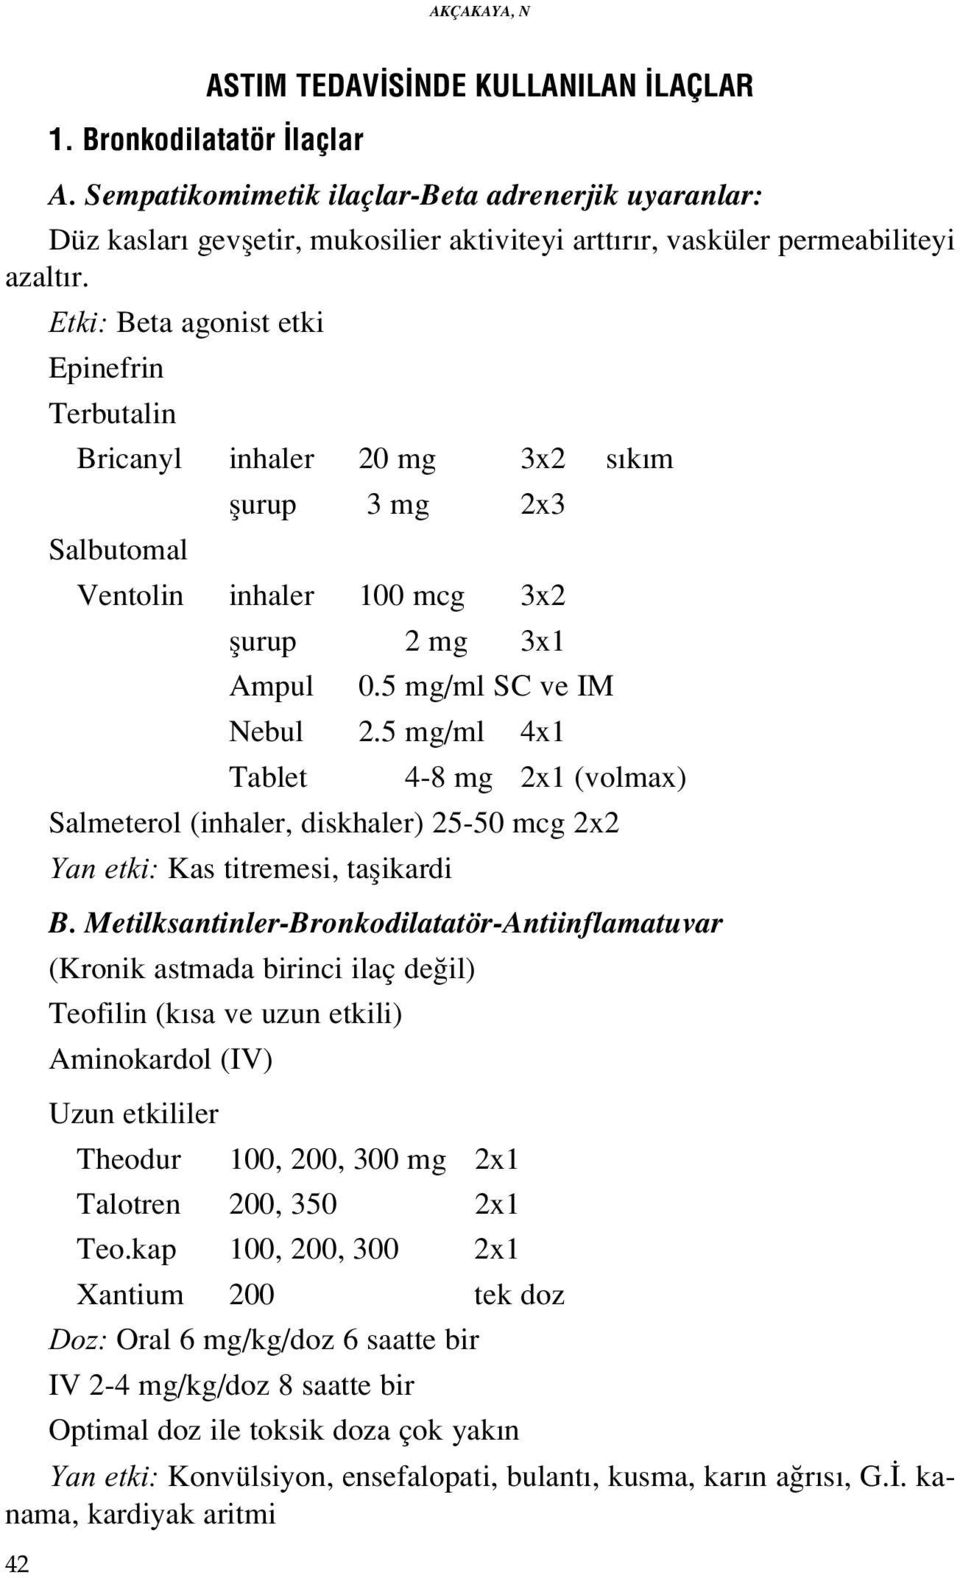 Etki: Beta agonist etki Epinefrin Terbutalin Bricanyl inhaler 20 mg 3x2 s k m flurup 3 mg 2x3 Salbutomal Ventolin inhaler 100 mcg 3x2 flurup 2 mg 3x1 Ampul 0.5 mg/ml SC ve IM Nebul 2.